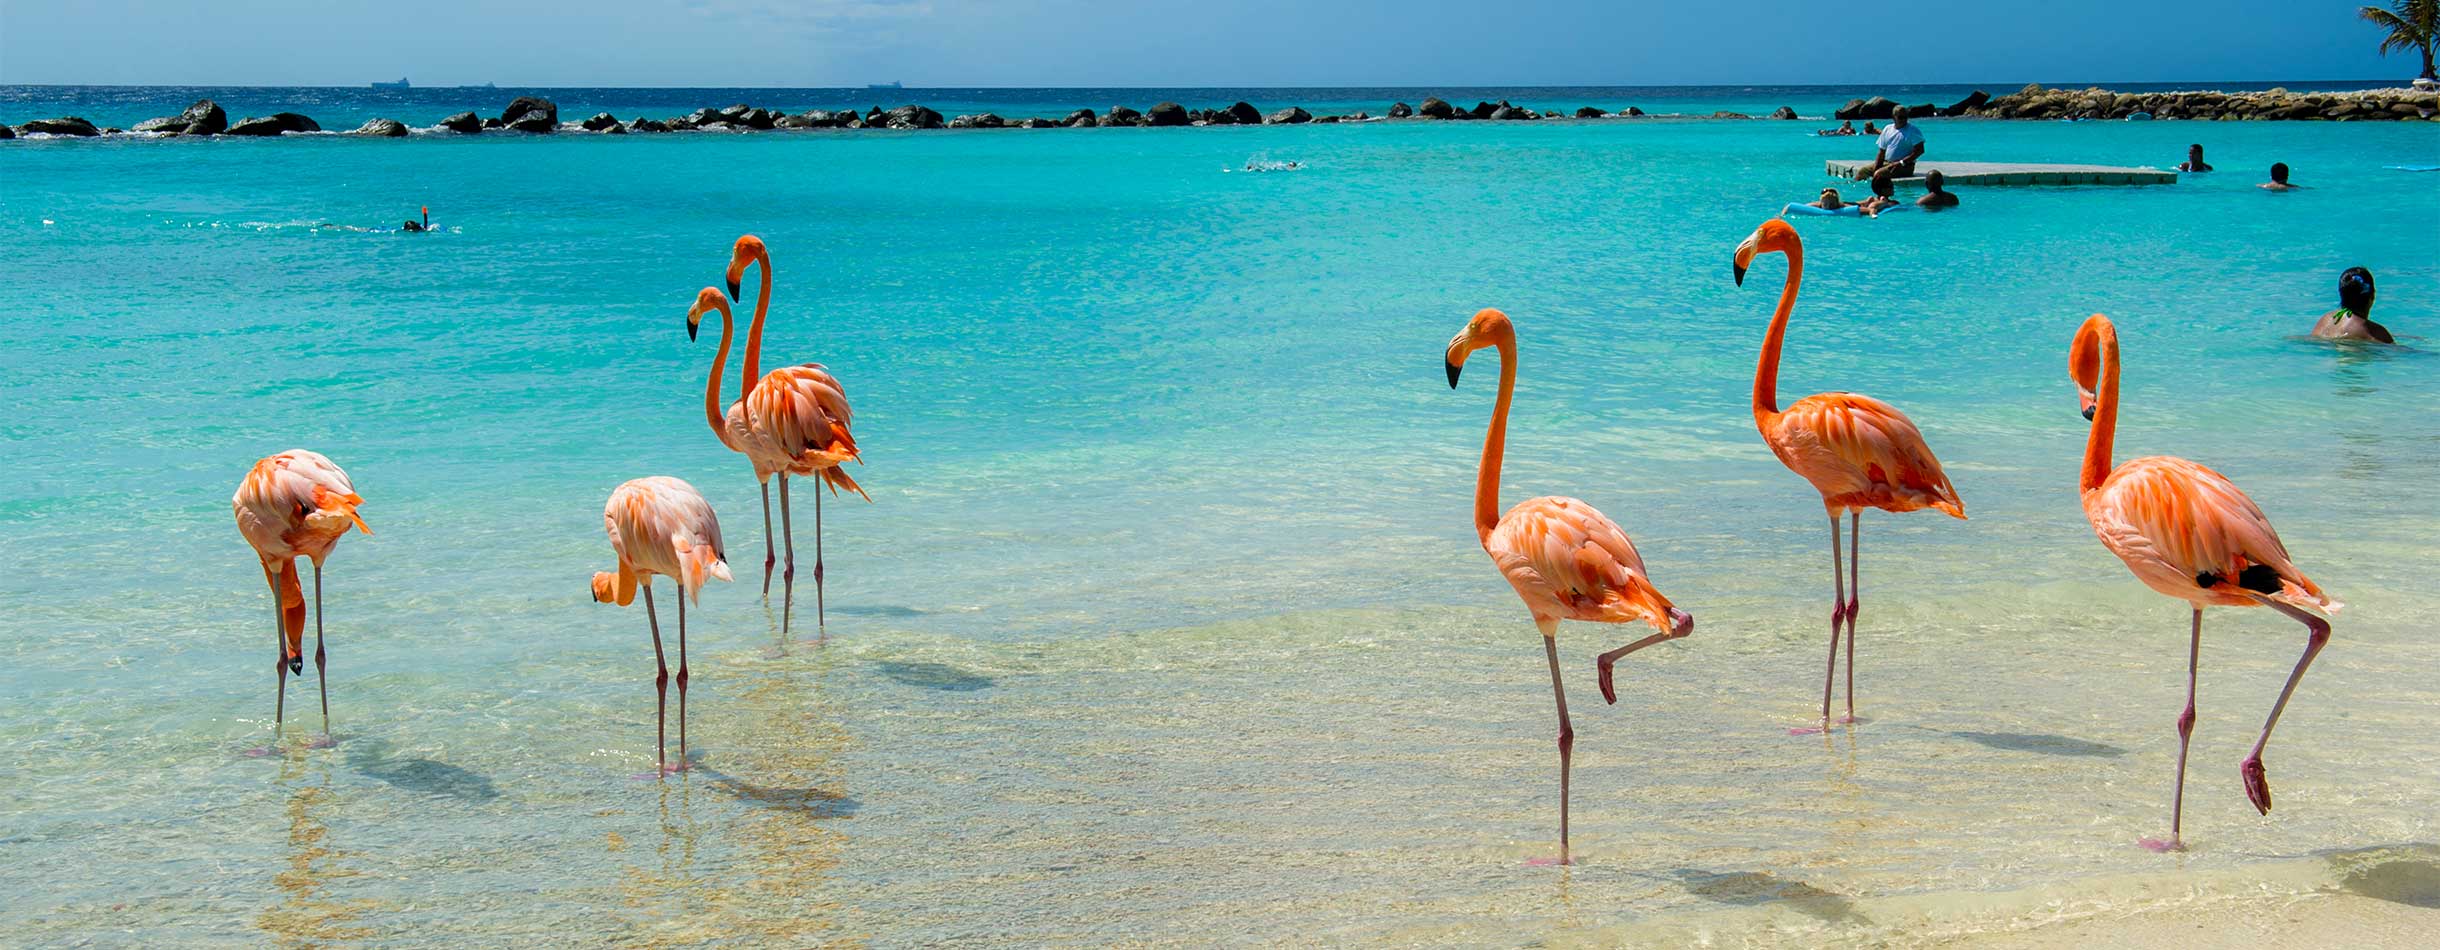 Flamingos on the beach, Aruba